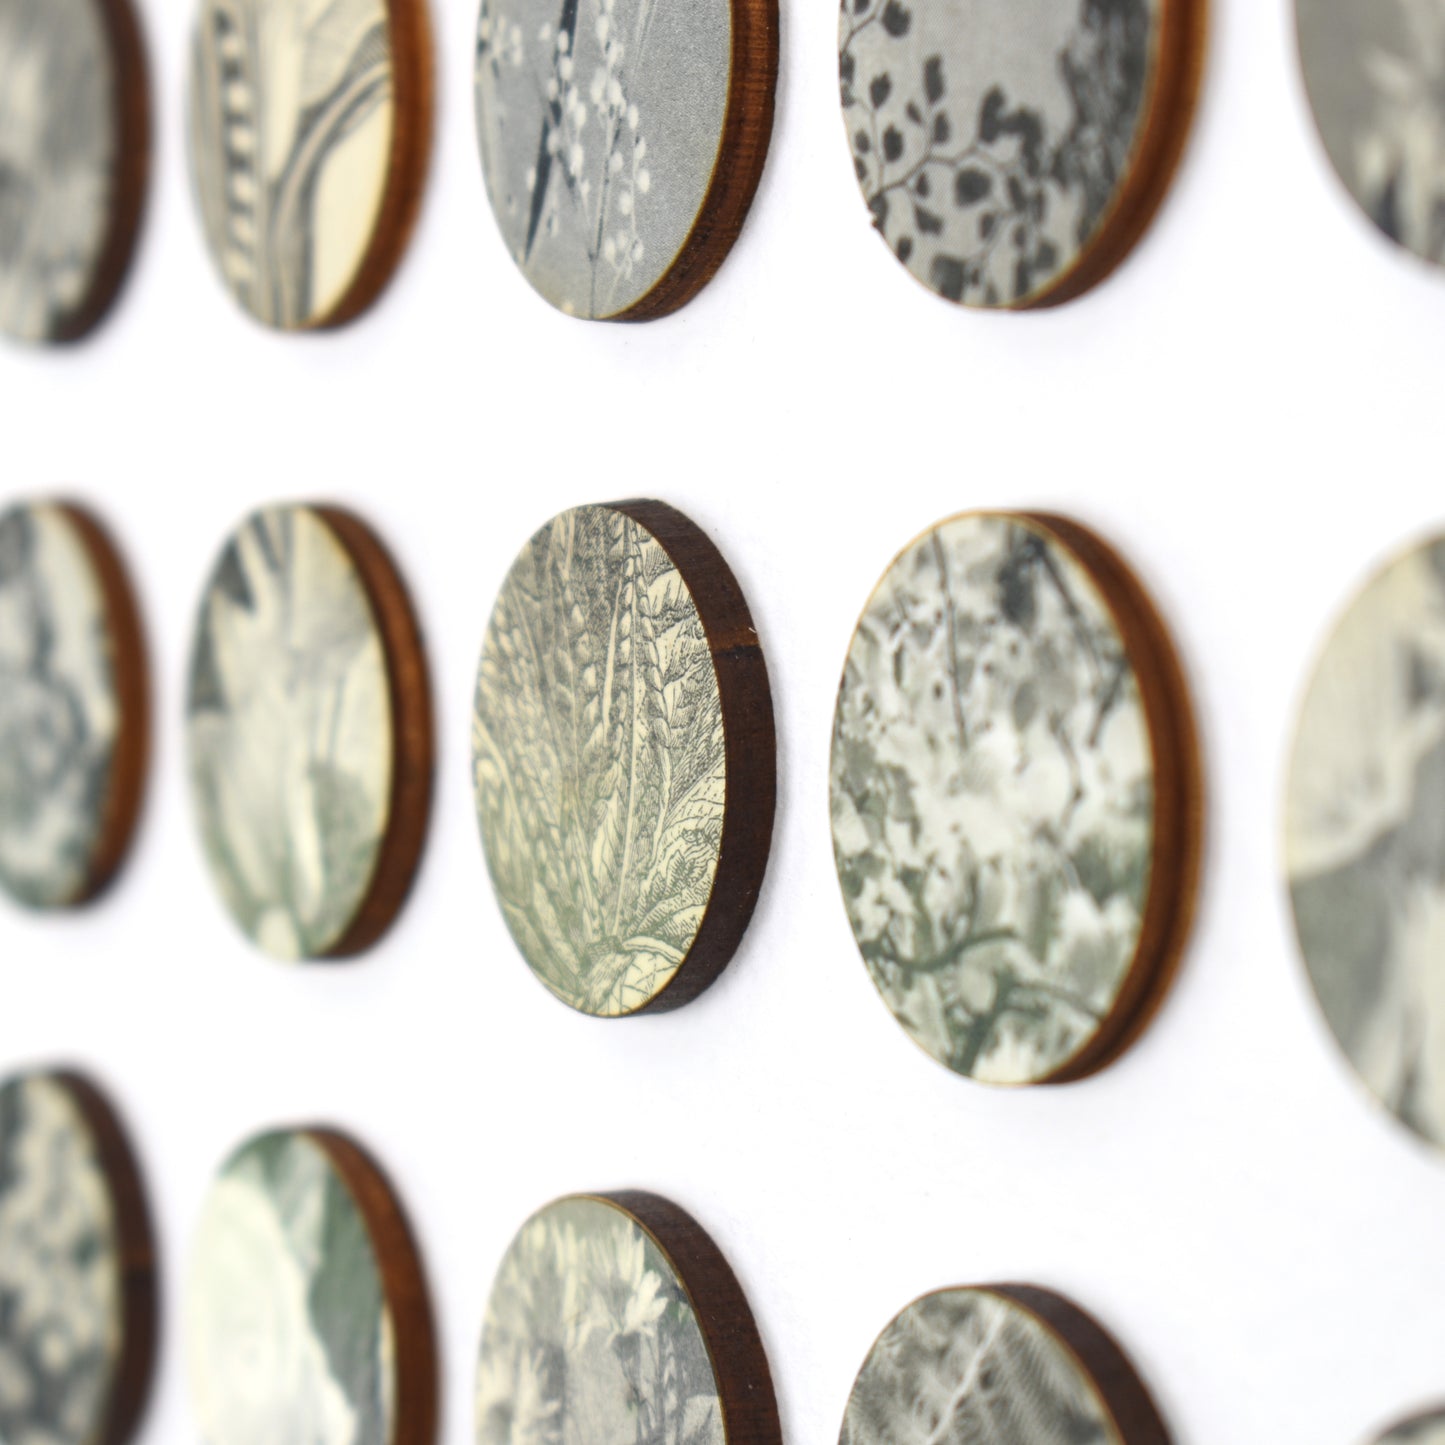 One Hundred Monochrome Botanical Dots Collage